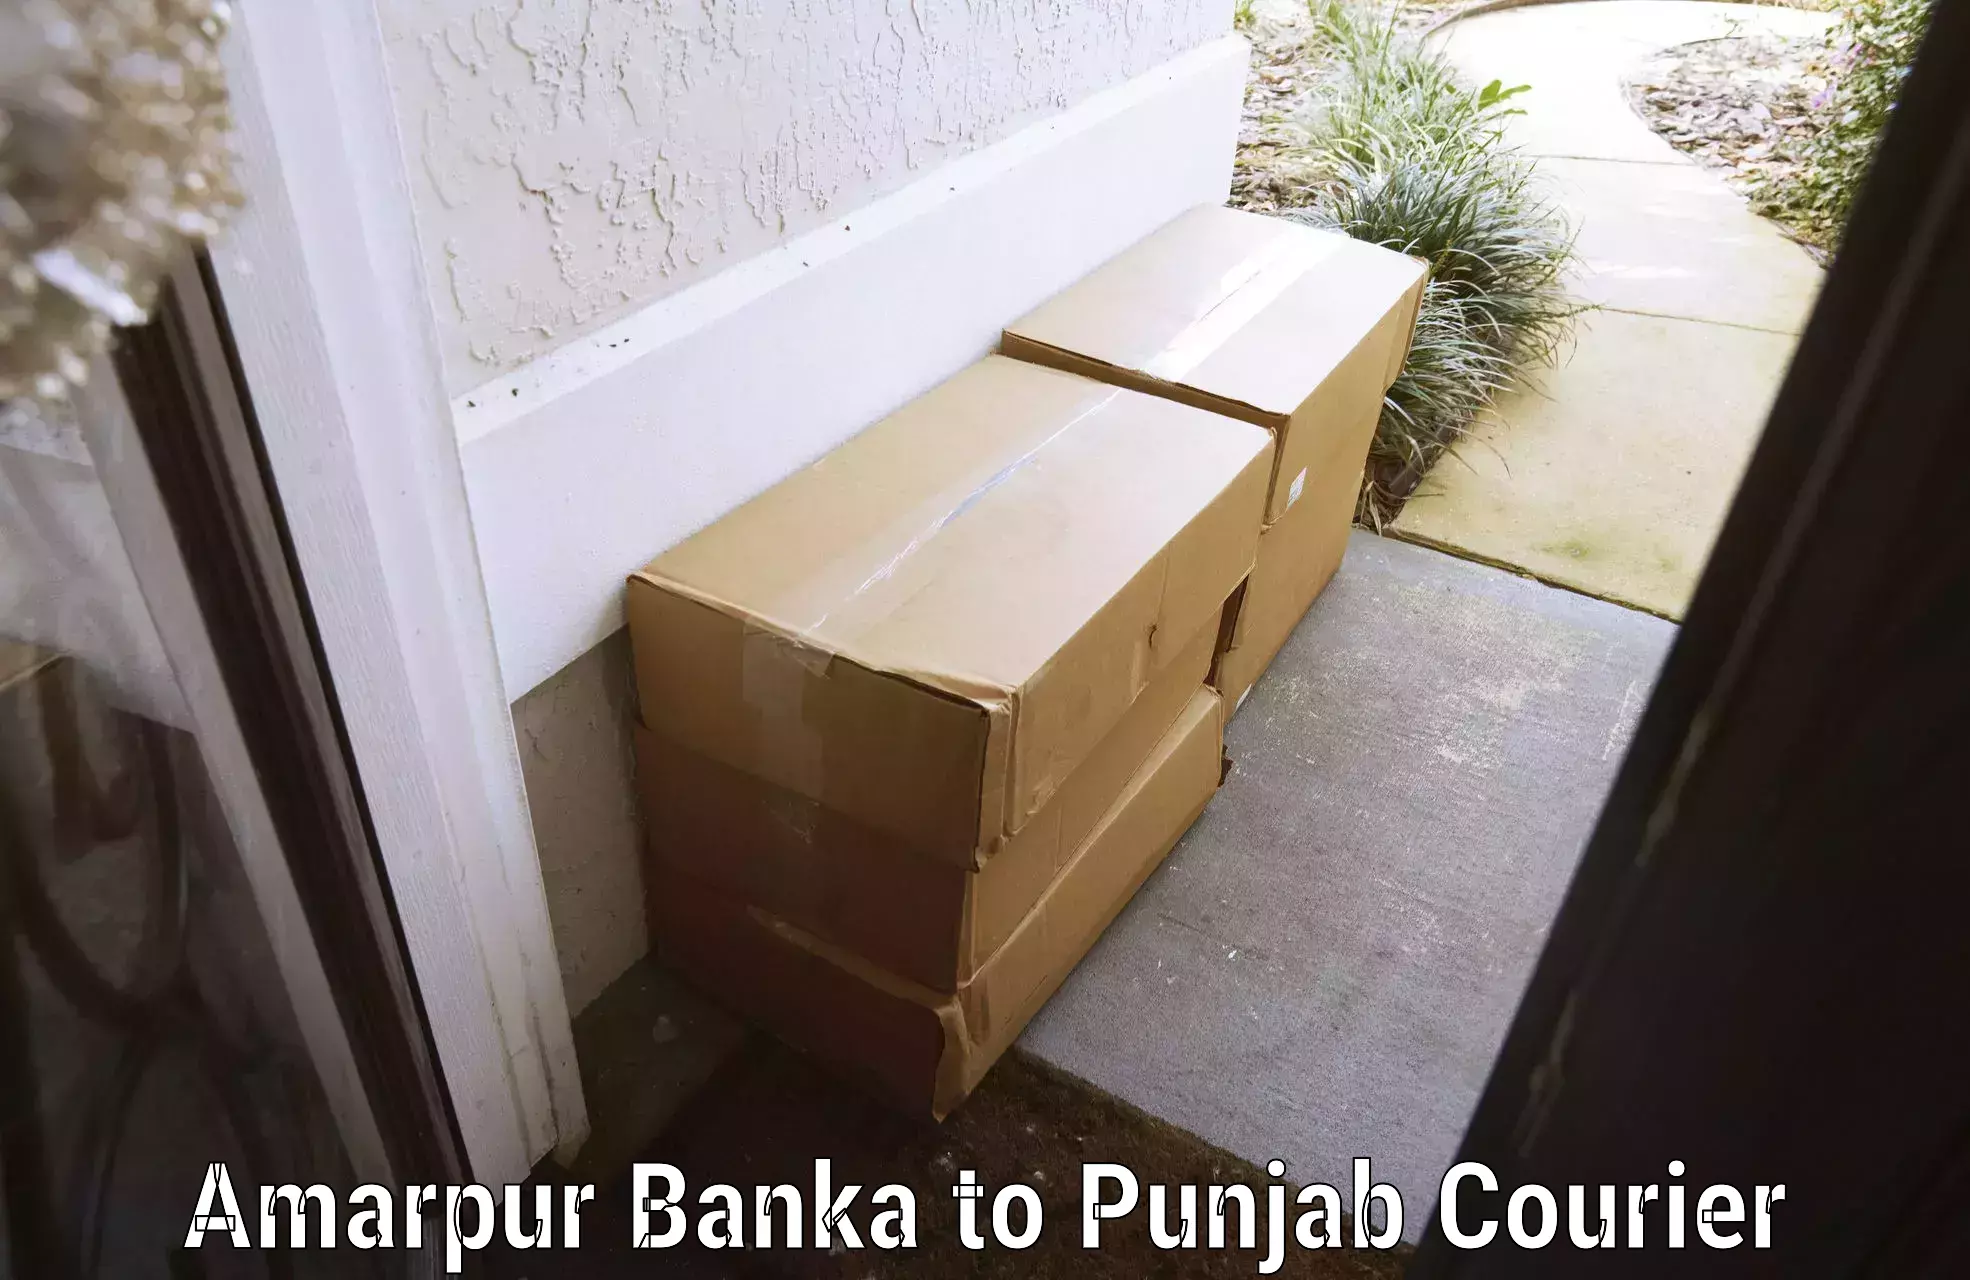 Express luggage delivery Amarpur Banka to Zirakpur